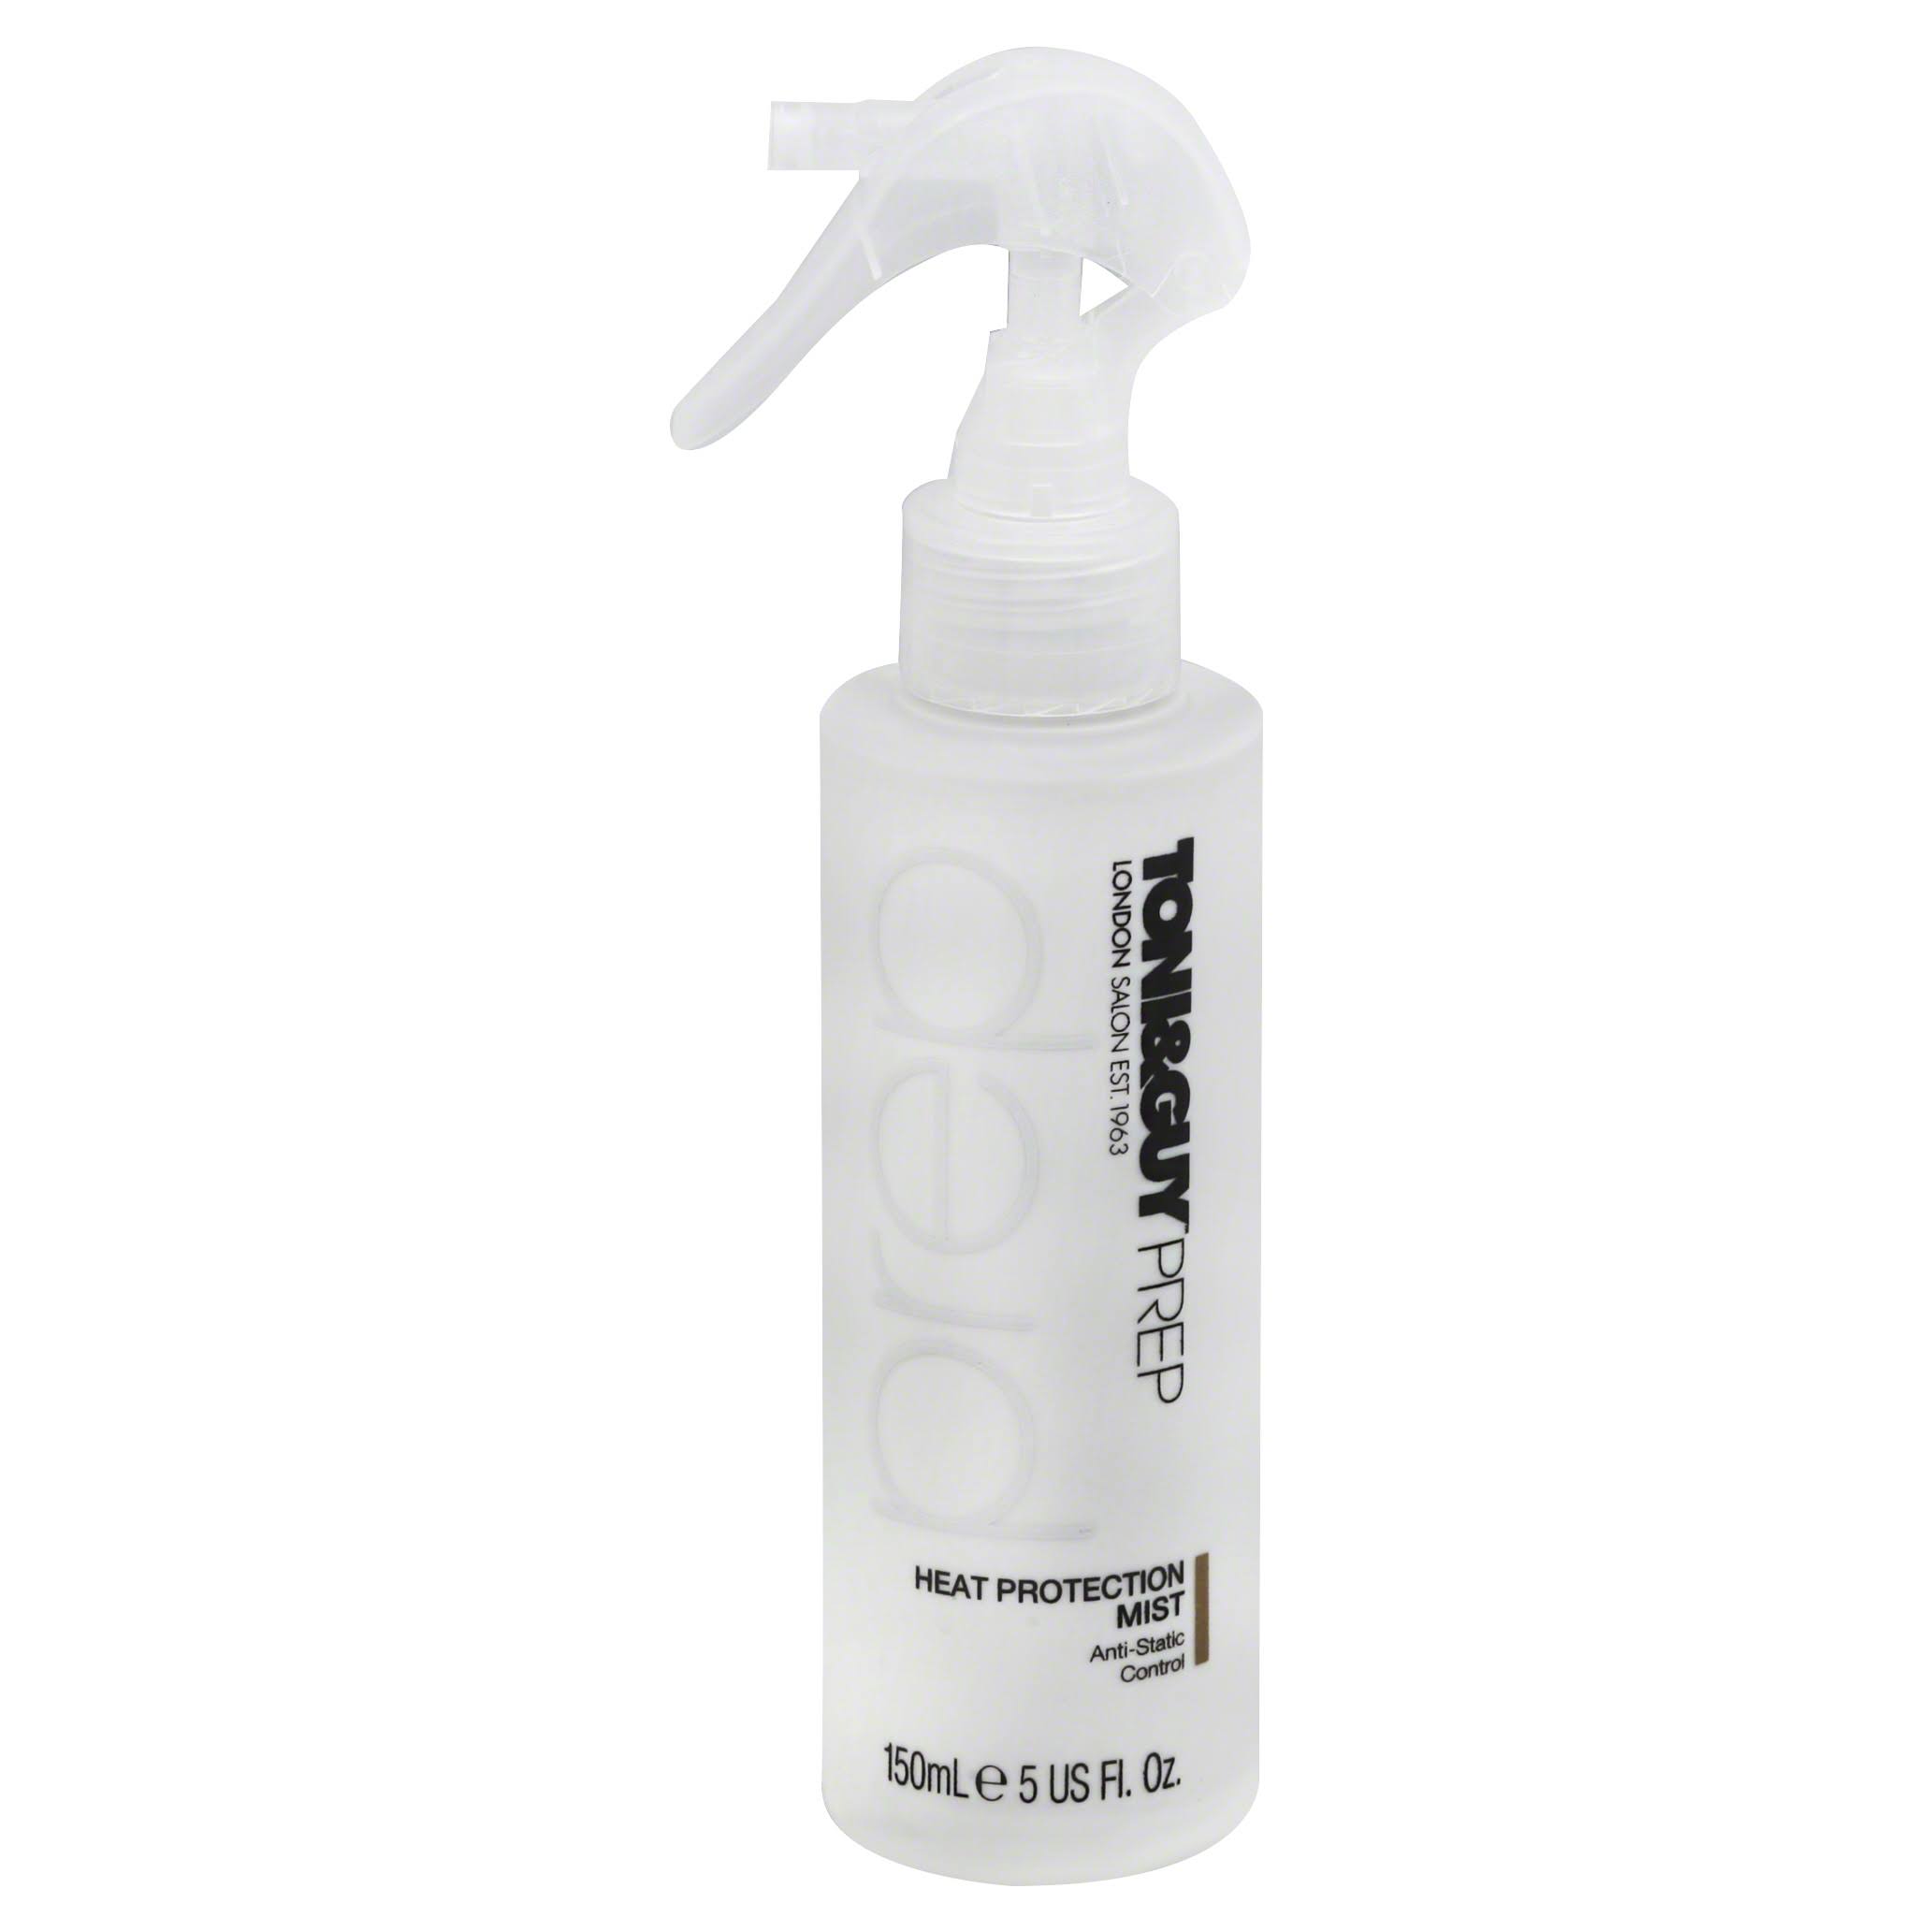 Toni & Guy Heat Protection Mist Spray - 150ml